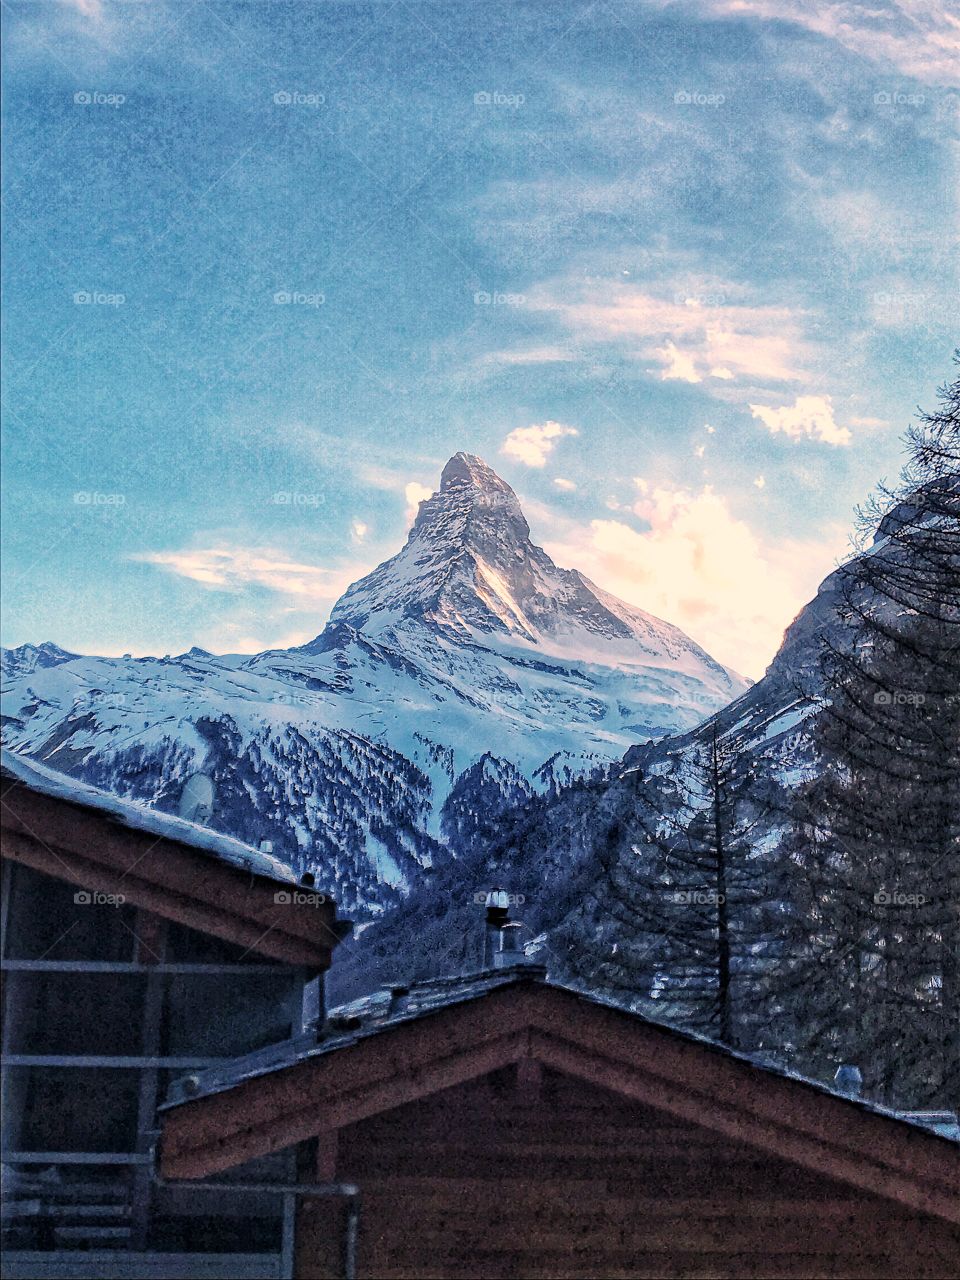 The rugged beauty of Matterhorn can definitely take my breath away🗻